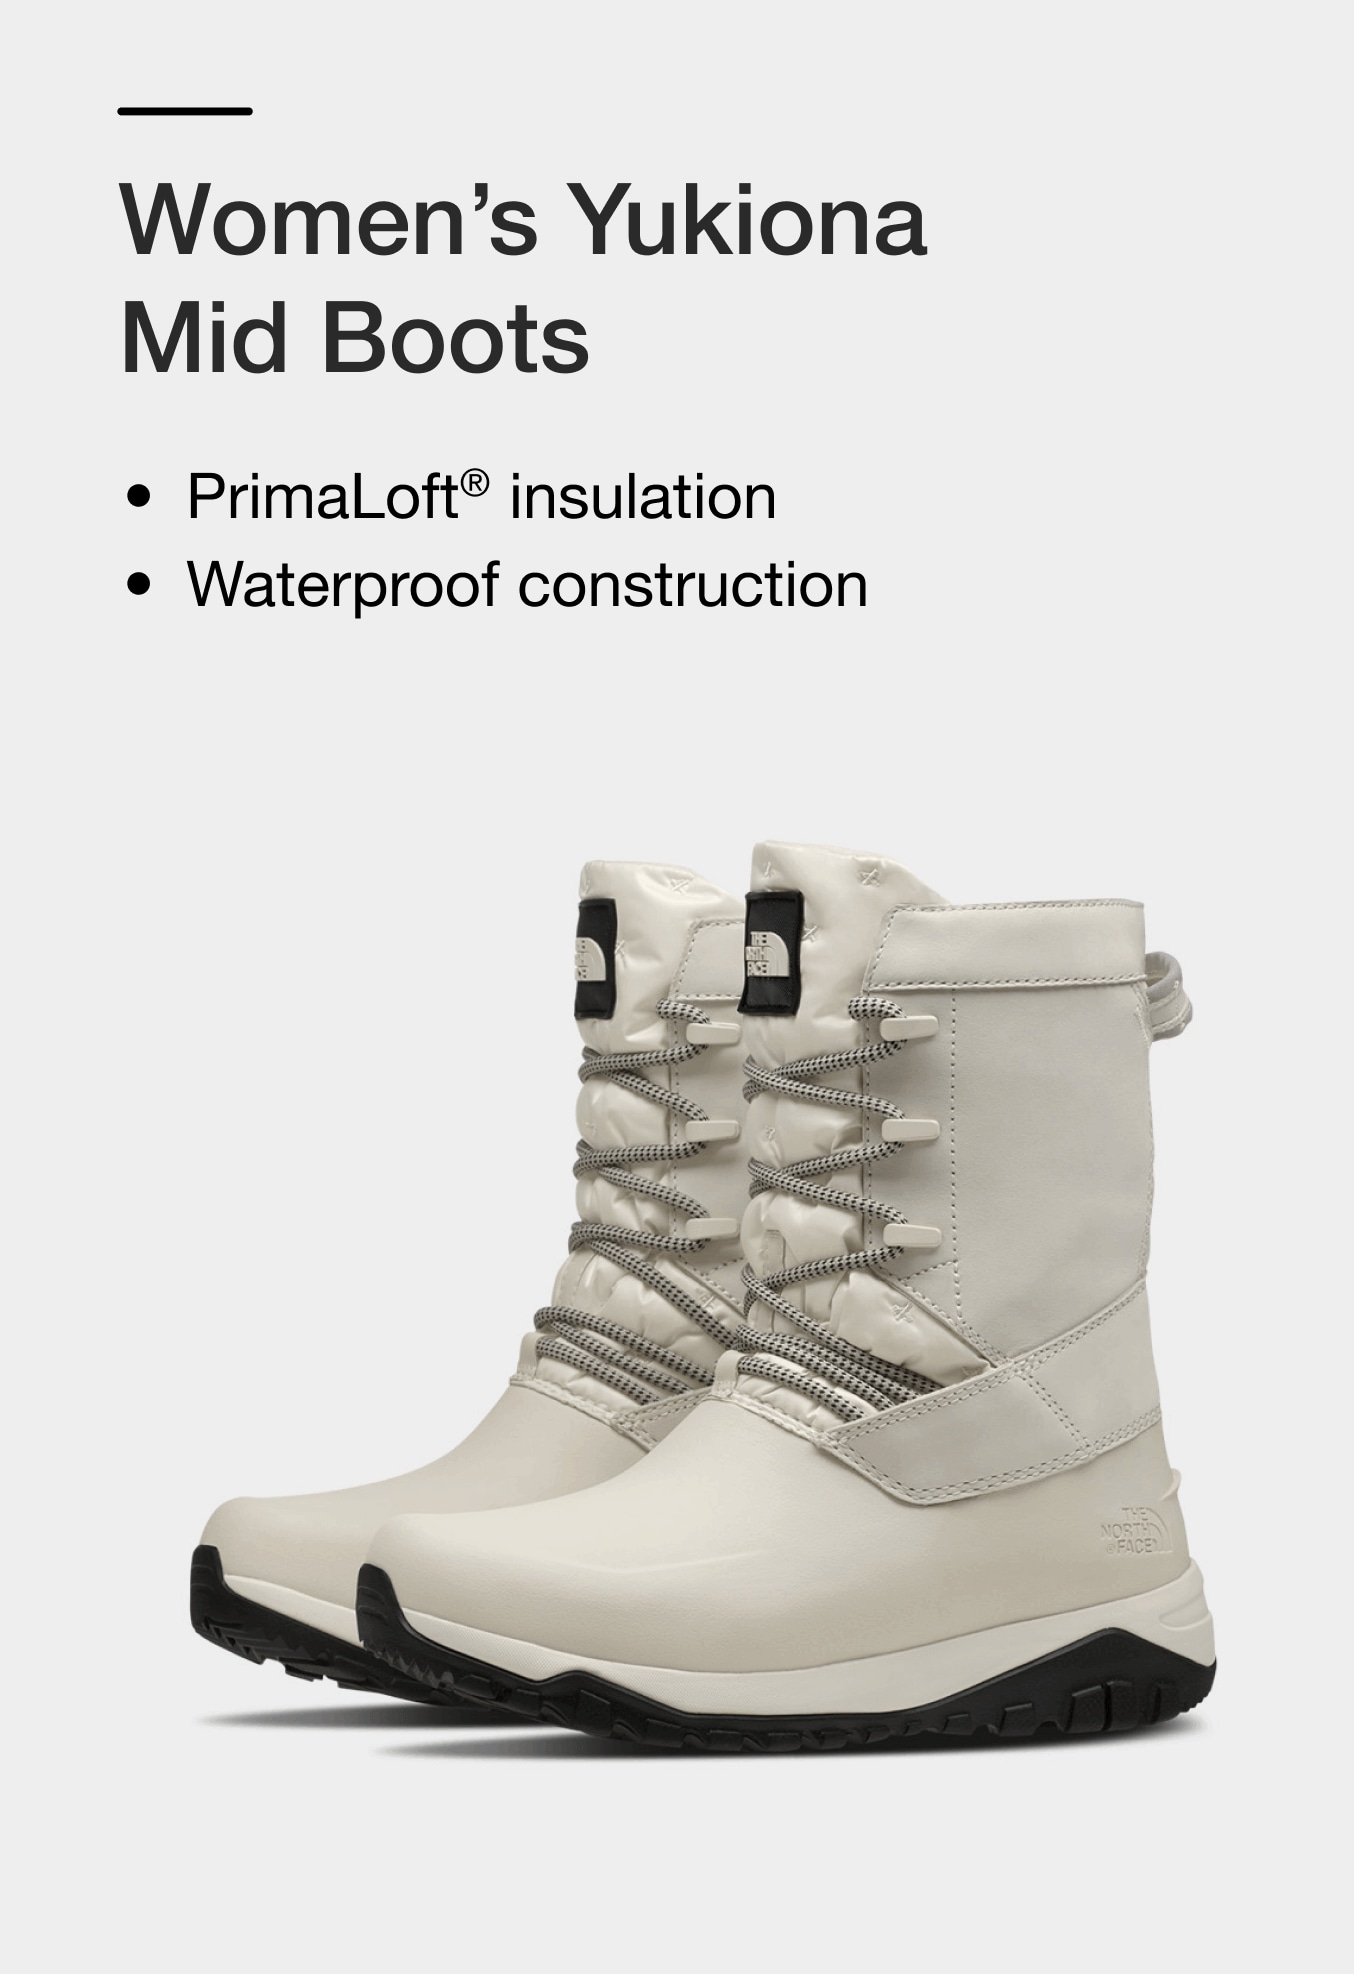 Water Resistant Winter Boots - Nefar